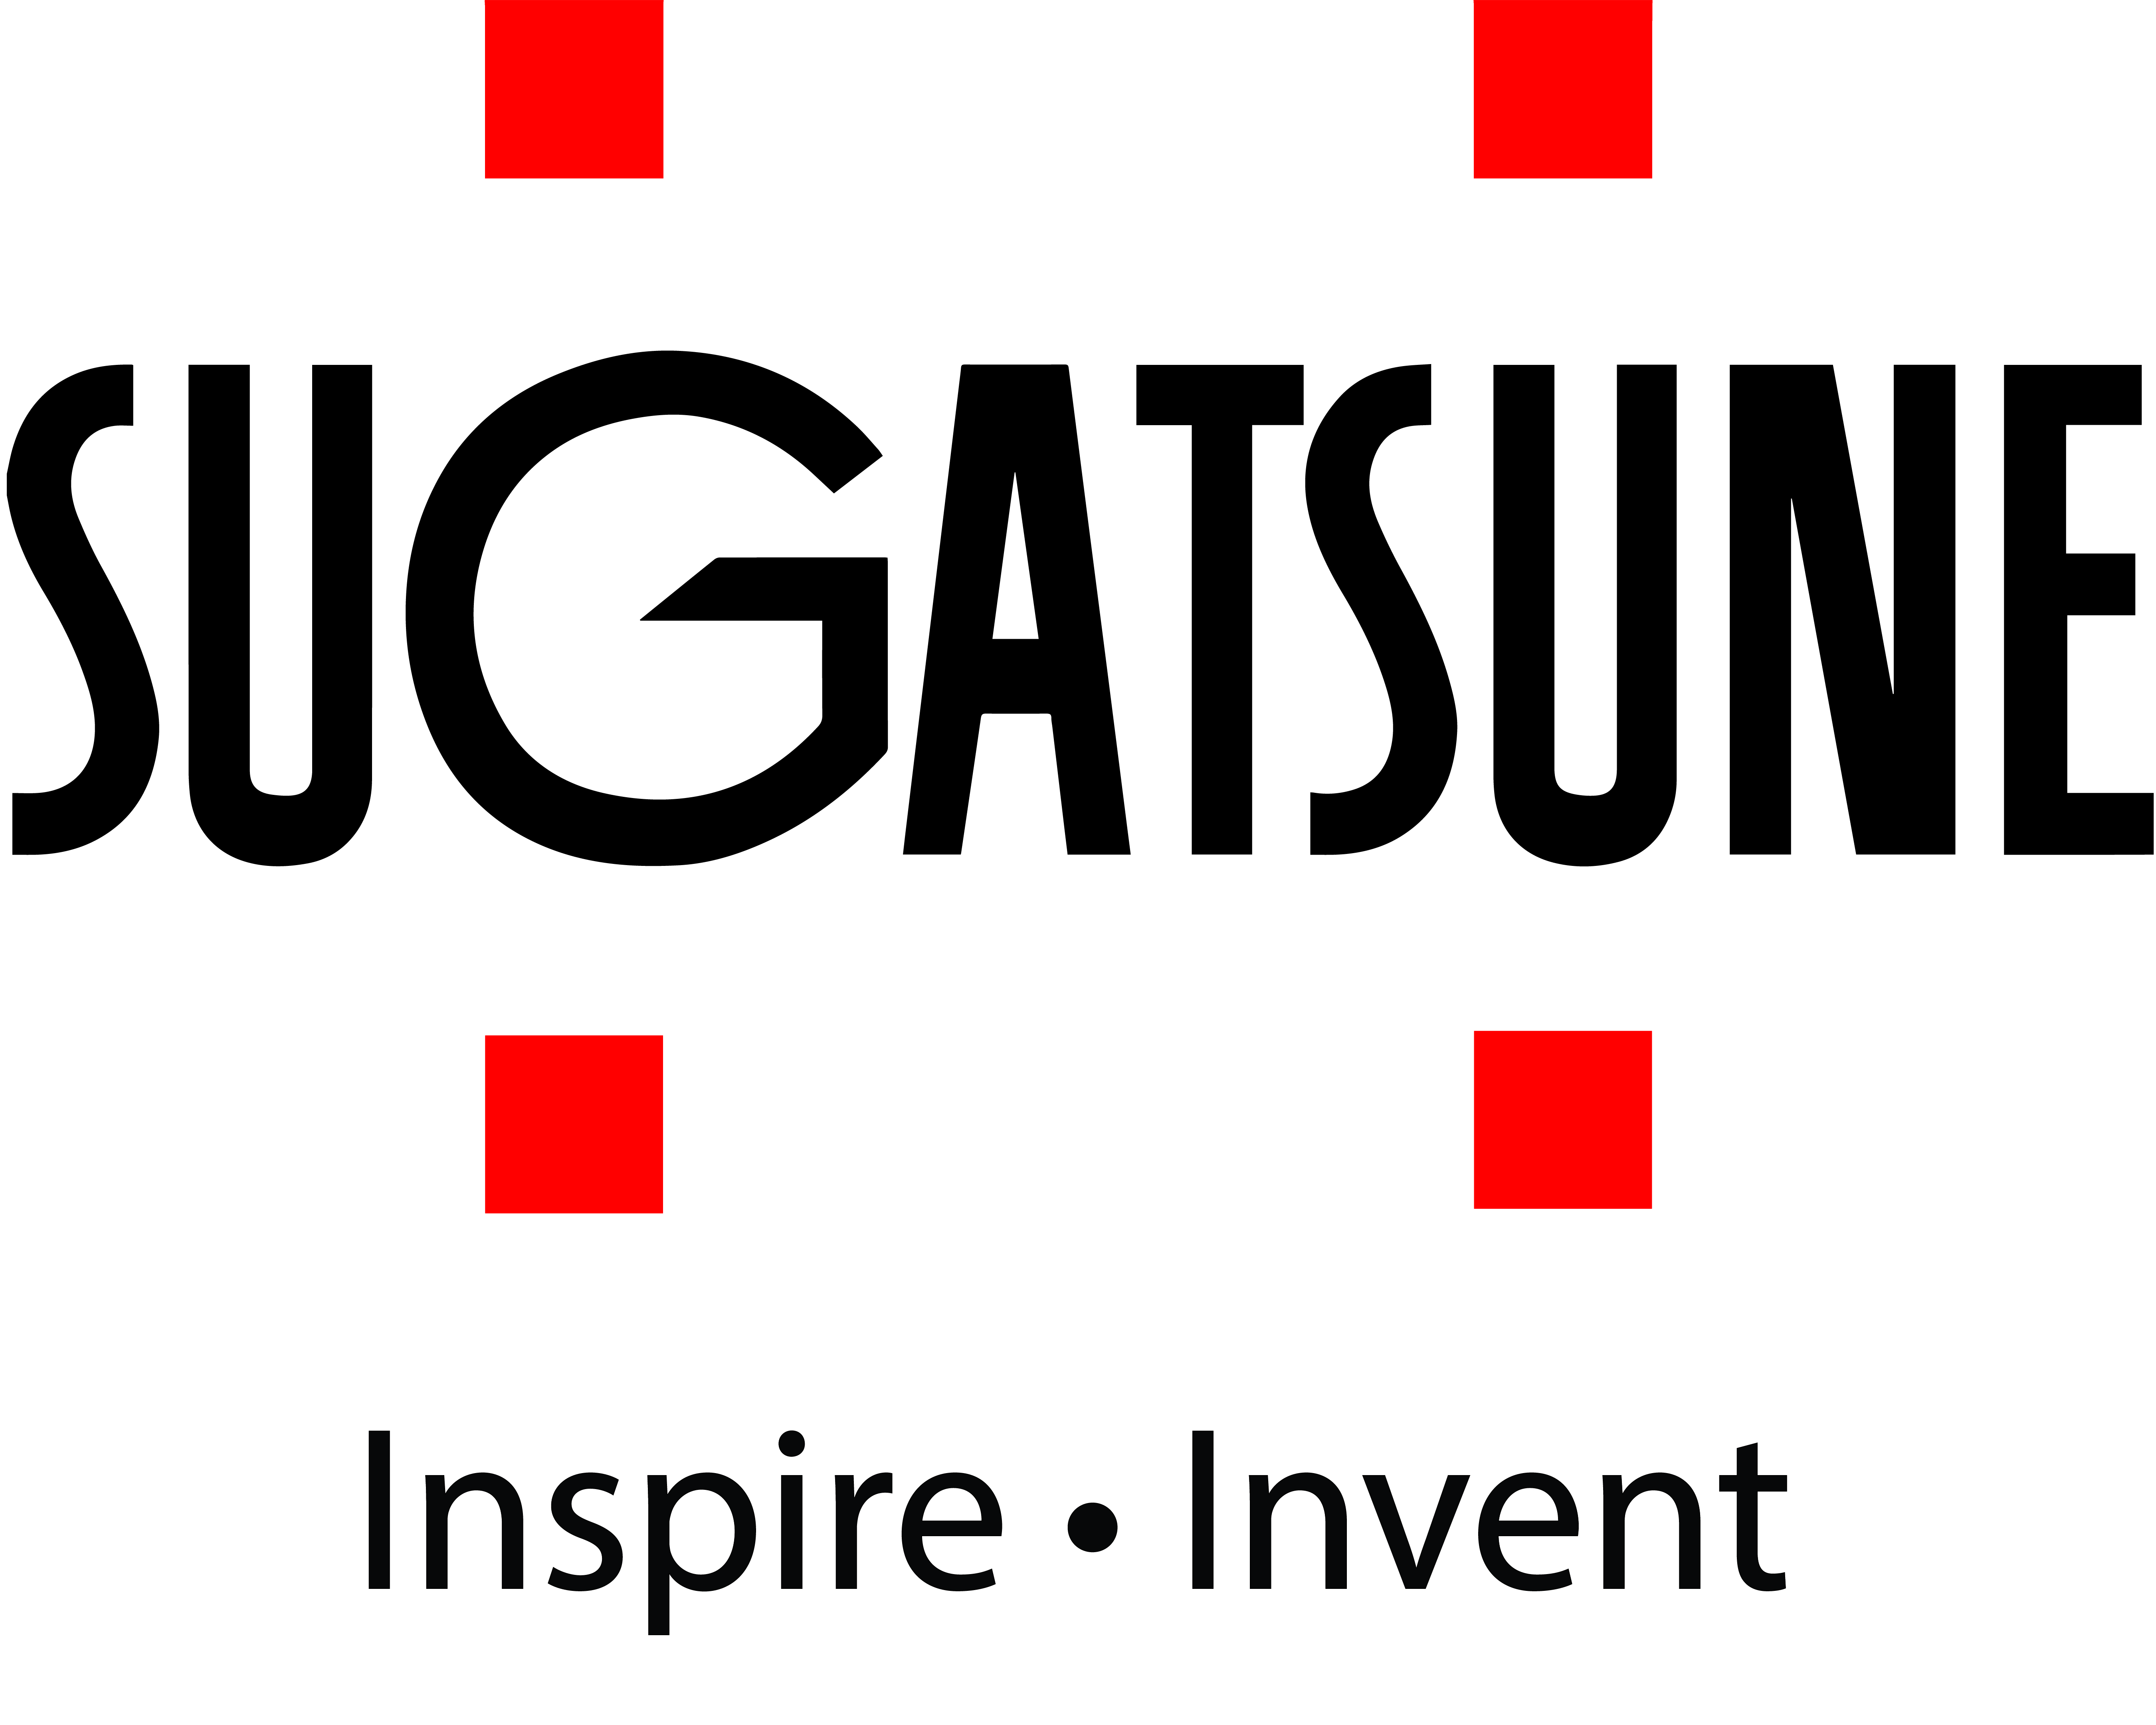 Find out more about Sugatsune